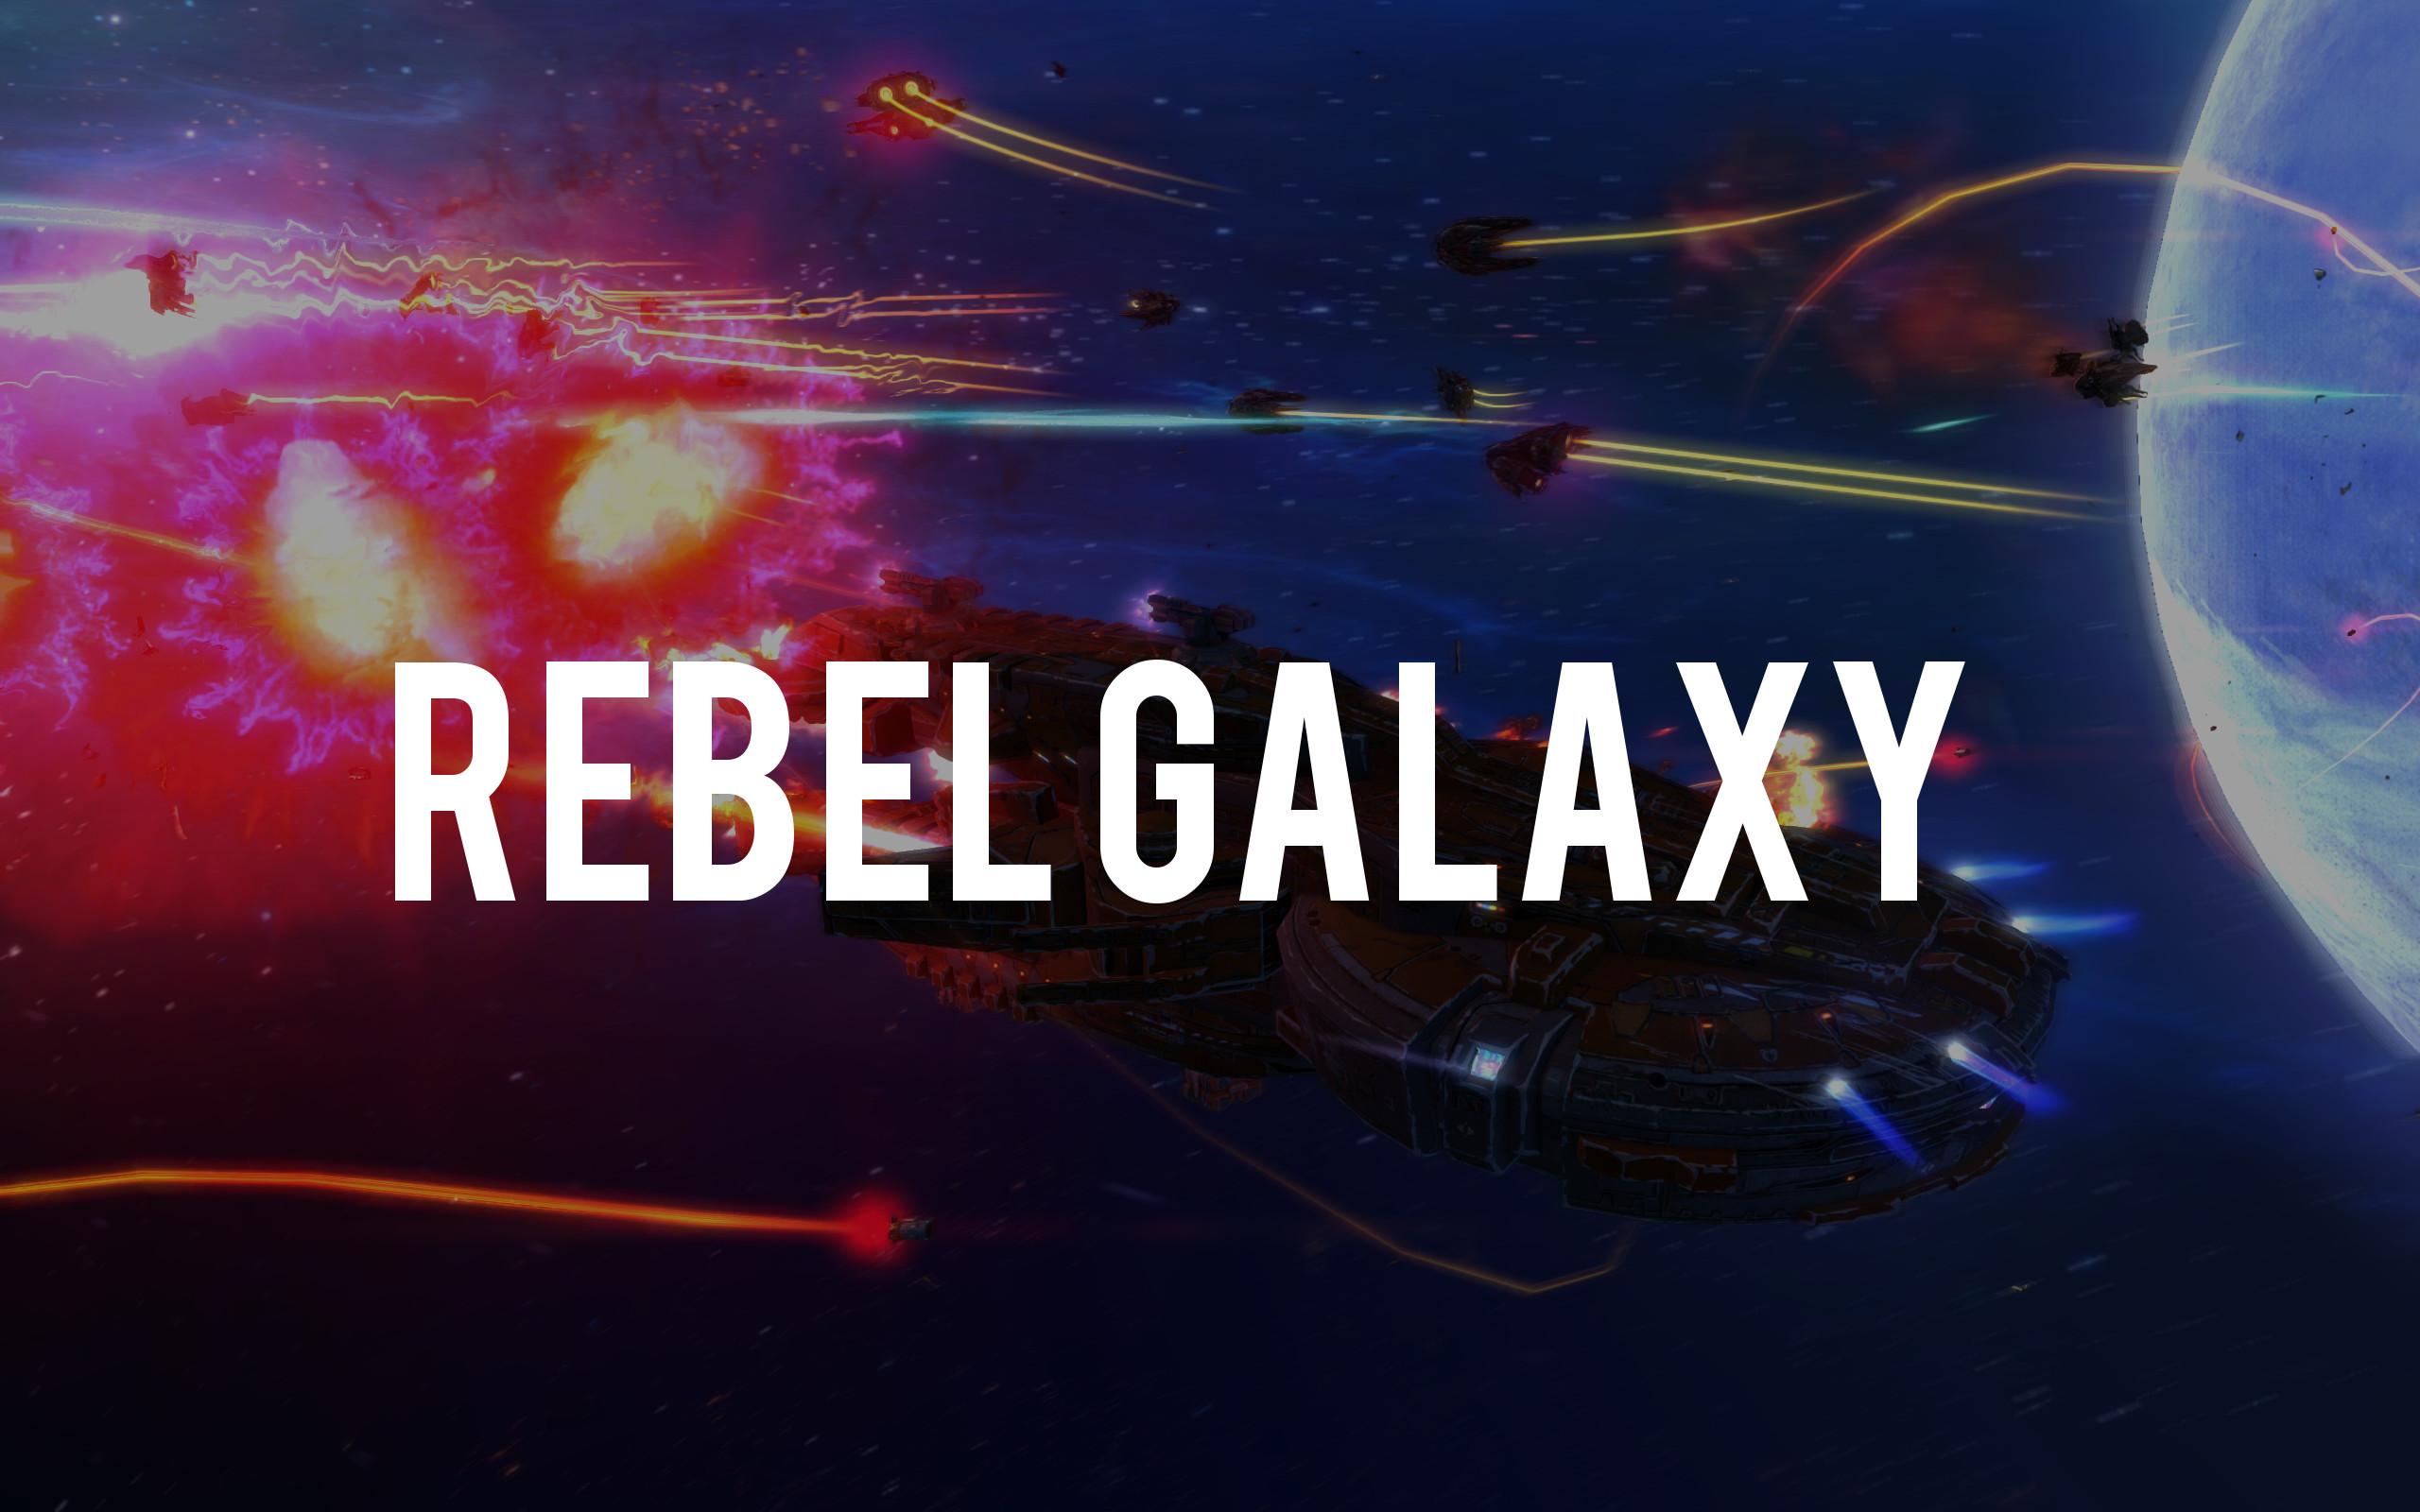 Rebel Galaxy Release Date Announced A New